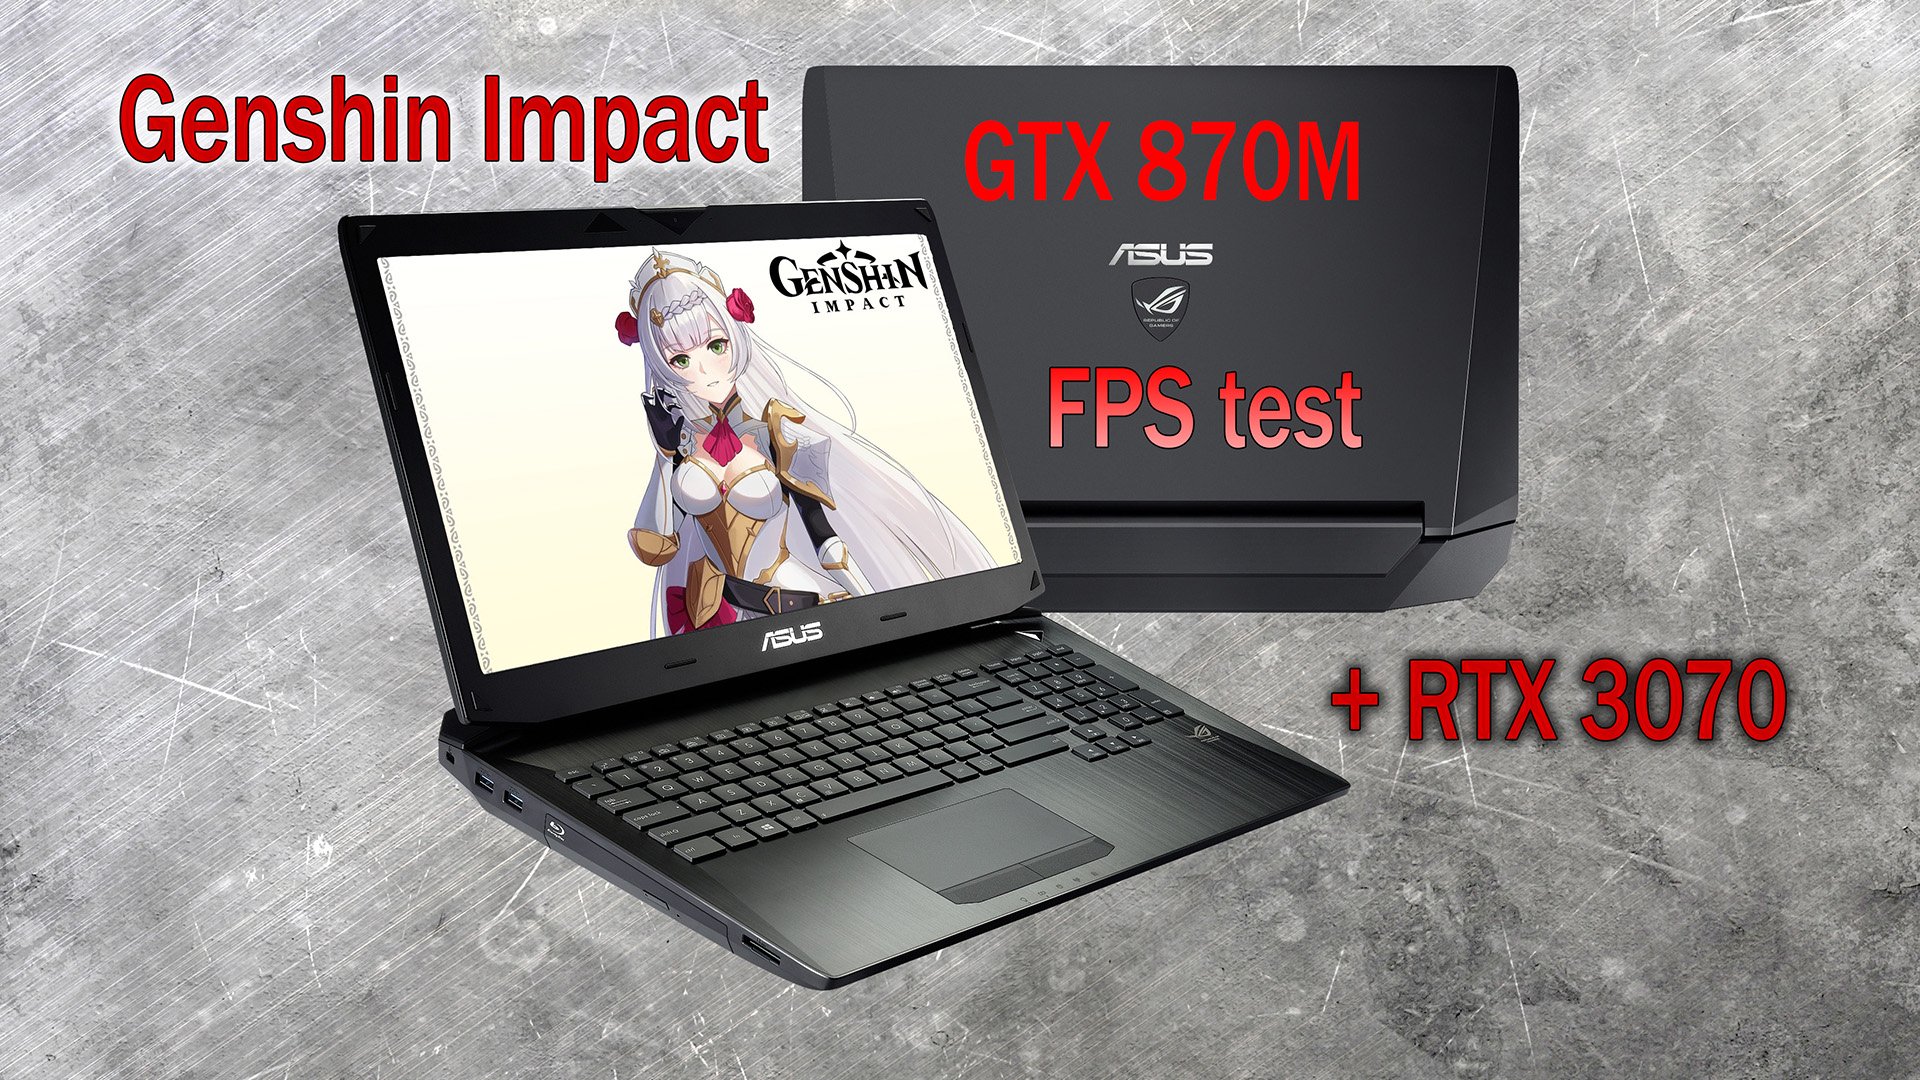 Genshin Impact. fps test на старом ноутбуке Asus g750js (gtx870m) + rtx3070